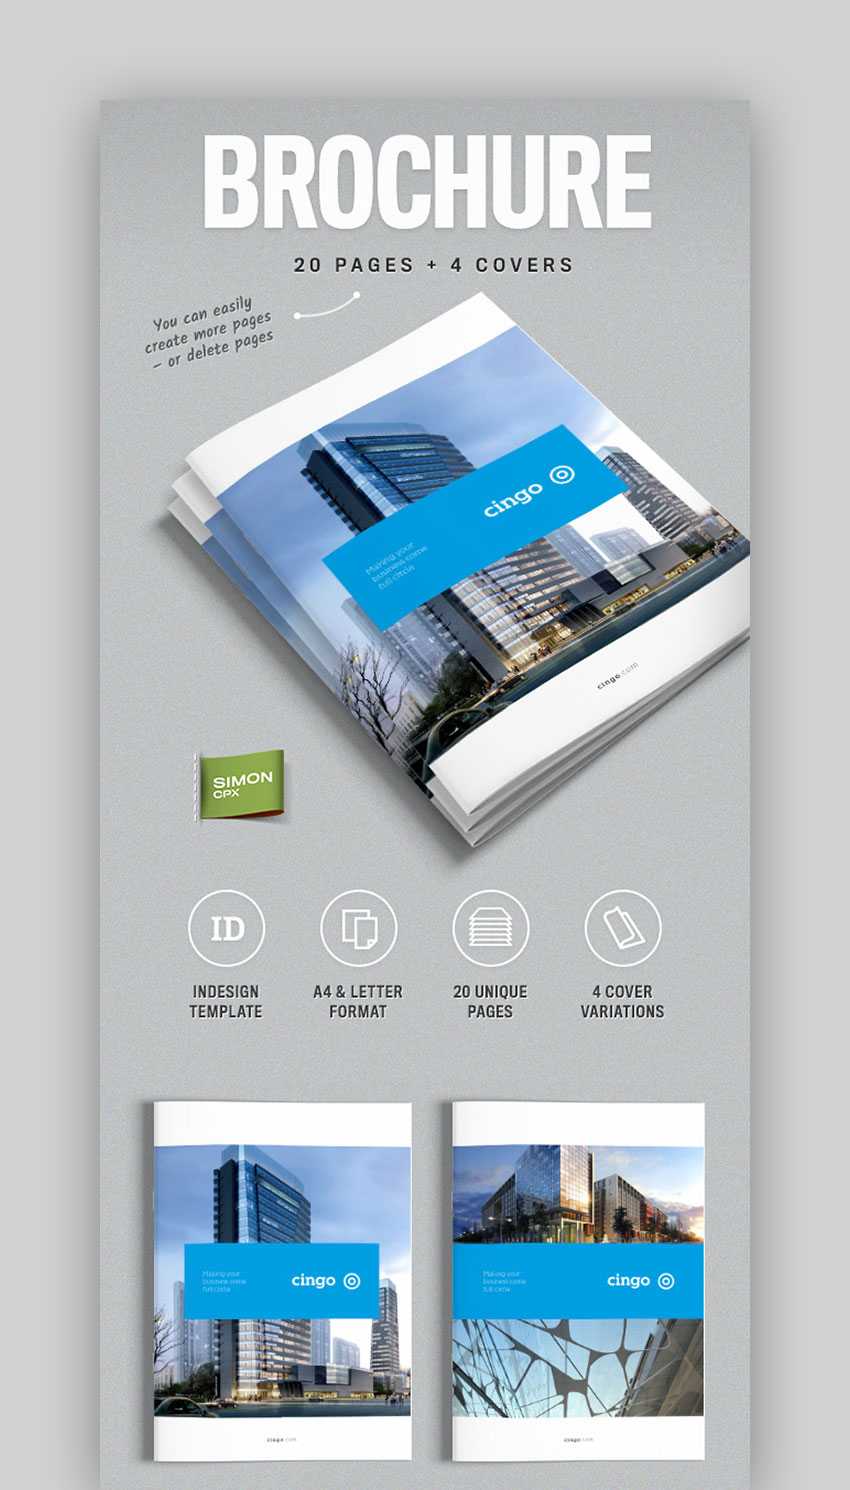 35 Best Indesign Brochure Templates – Creative Business Inside Letter Size Brochure Template